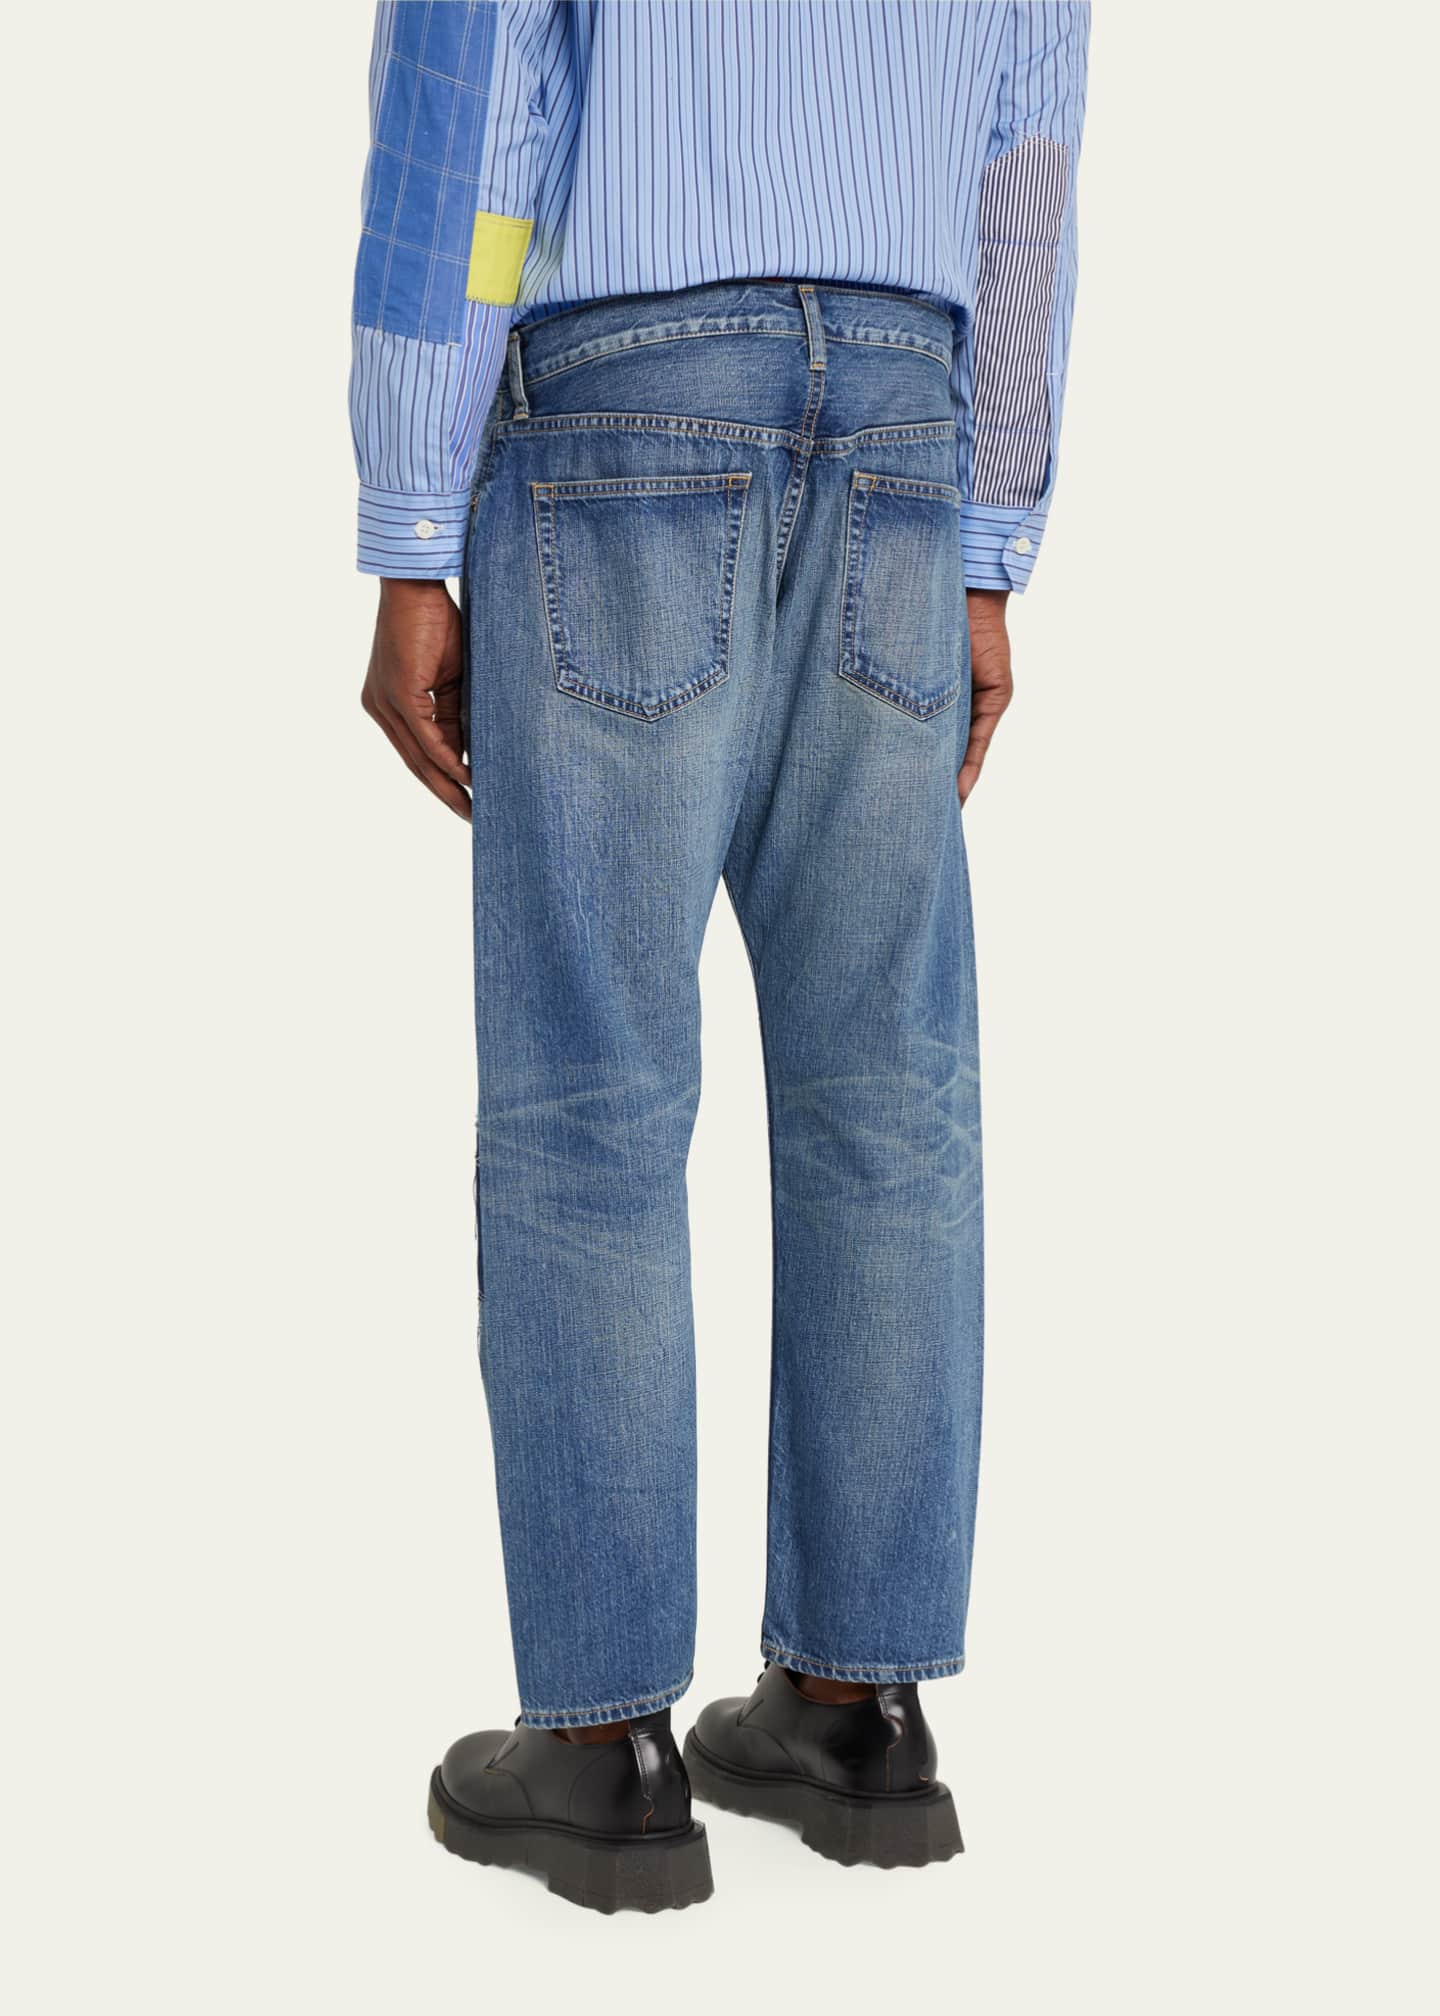 Junya Watanabe Men's Andy Warhol Patchwork Jeans - Bergdorf Goodman